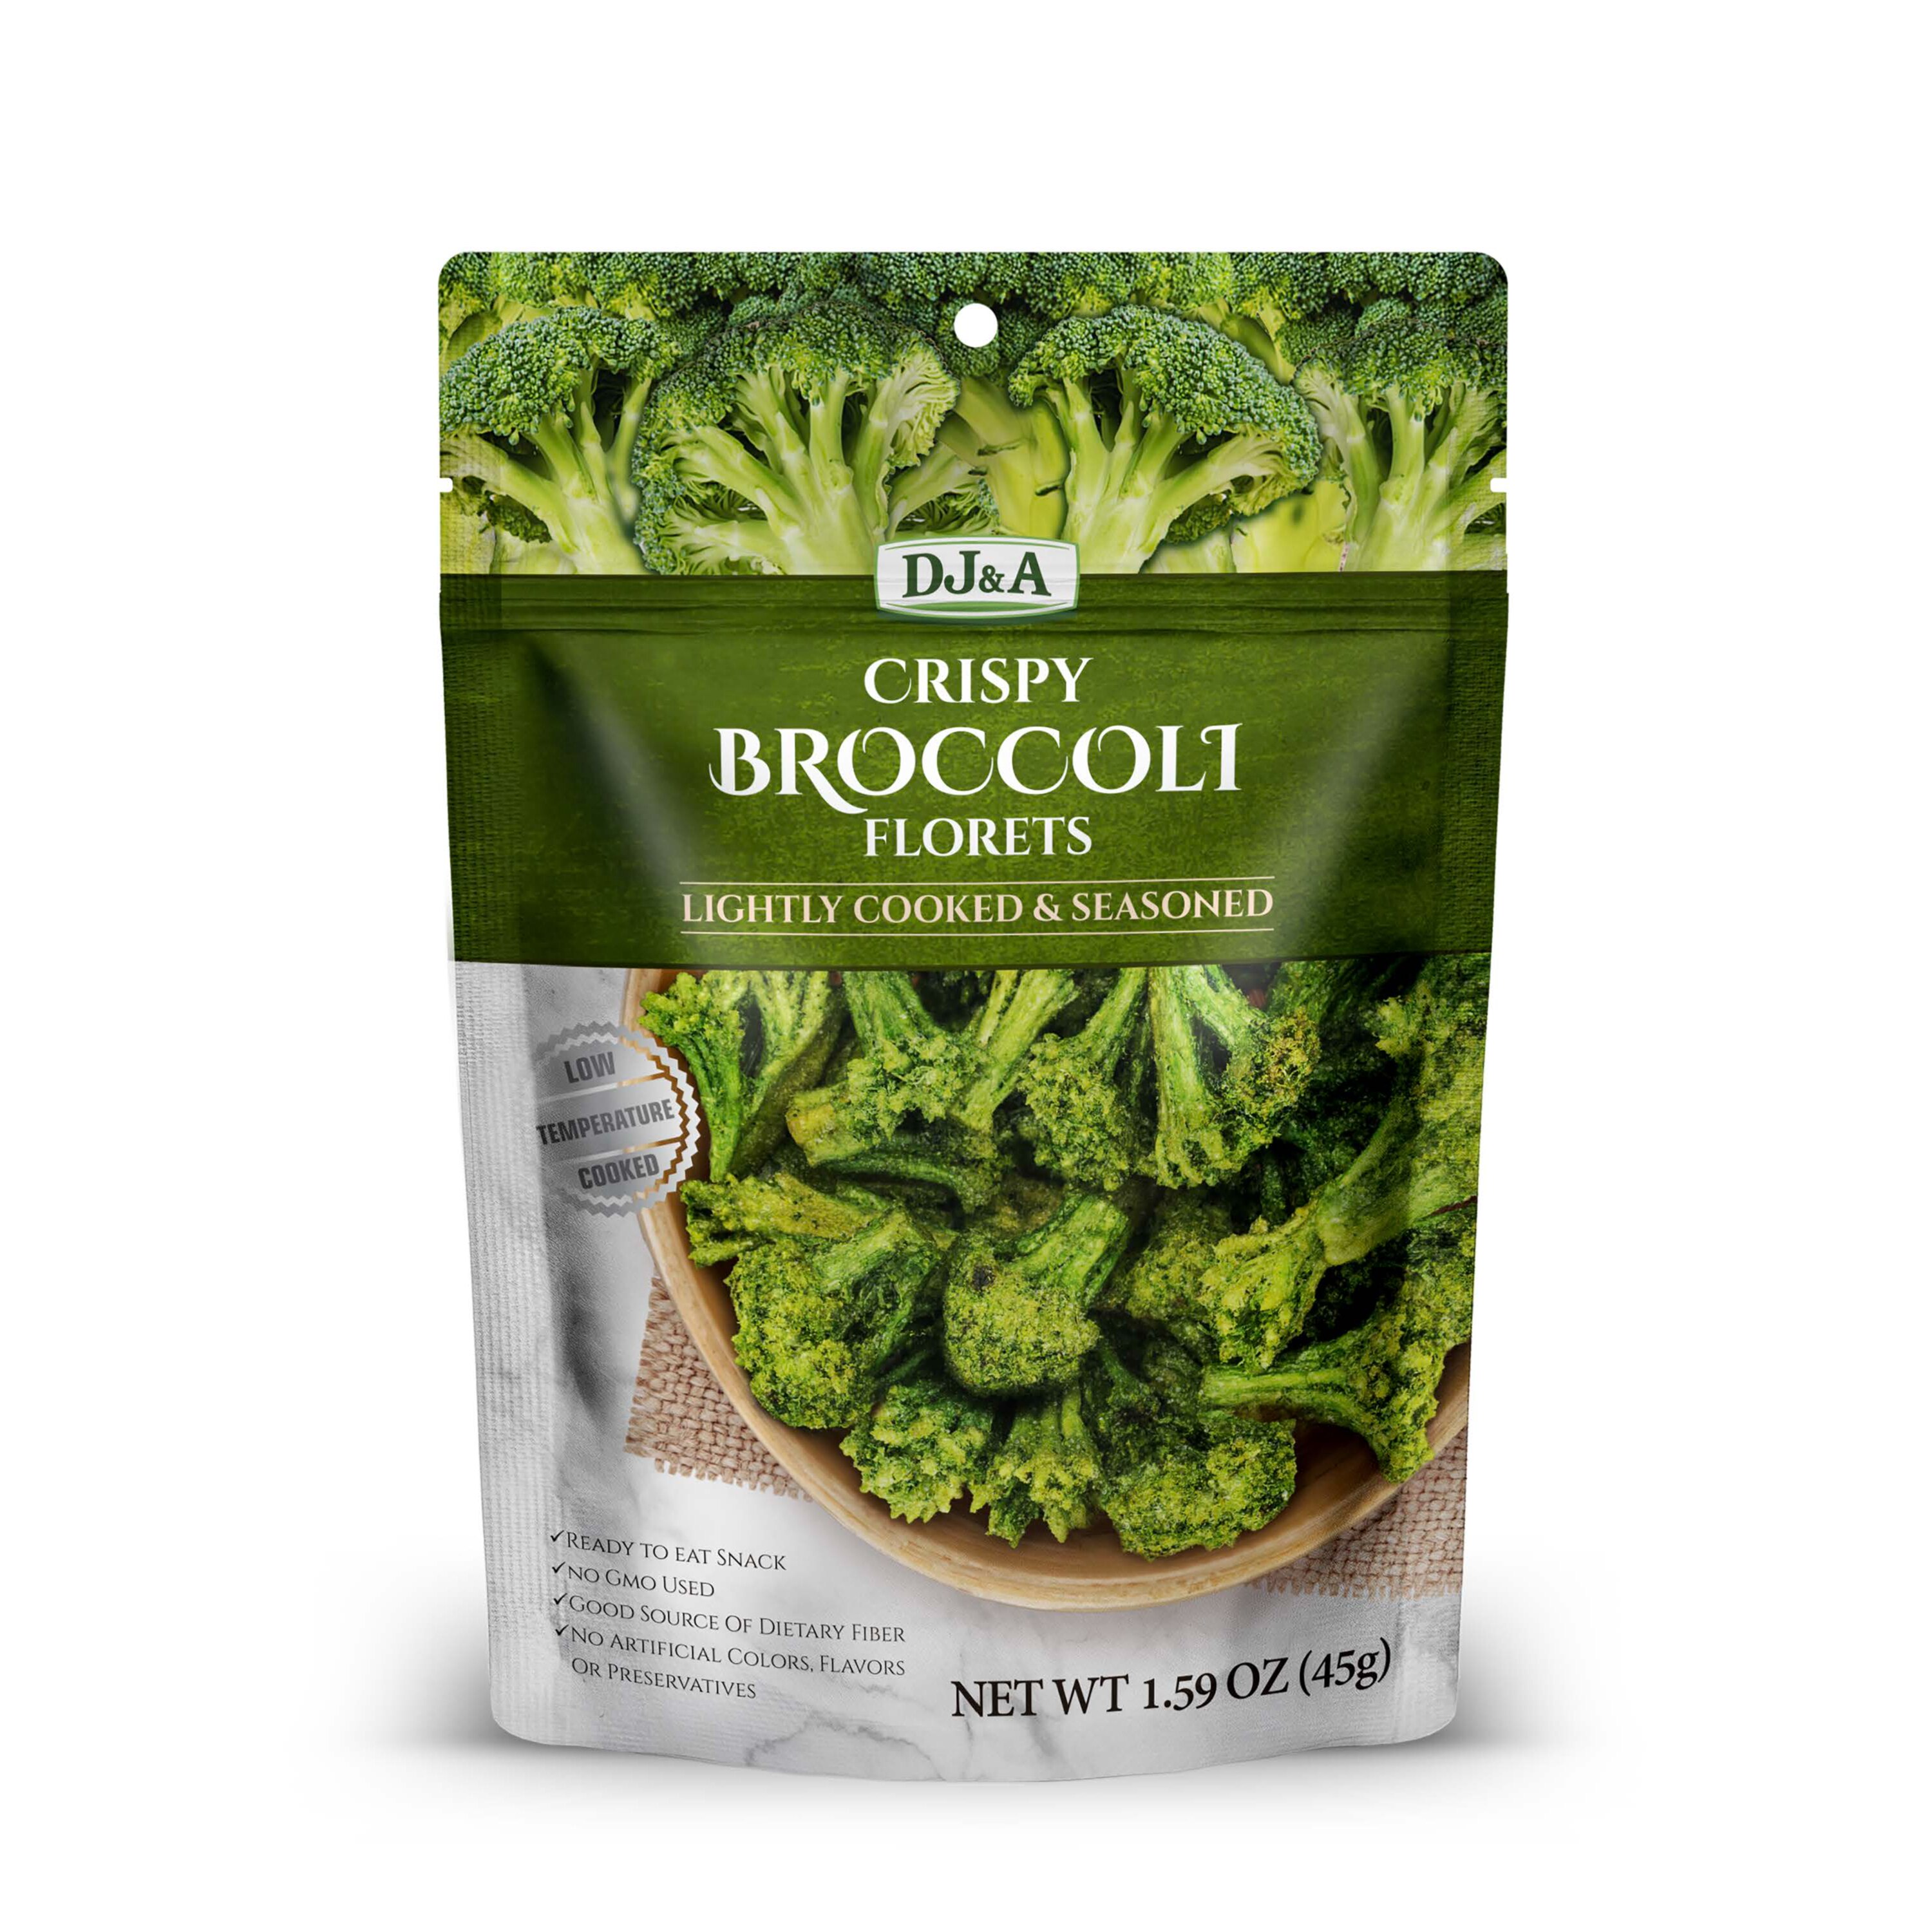 DJ&A Crispy Broccoli Florets, 1.59 OZ